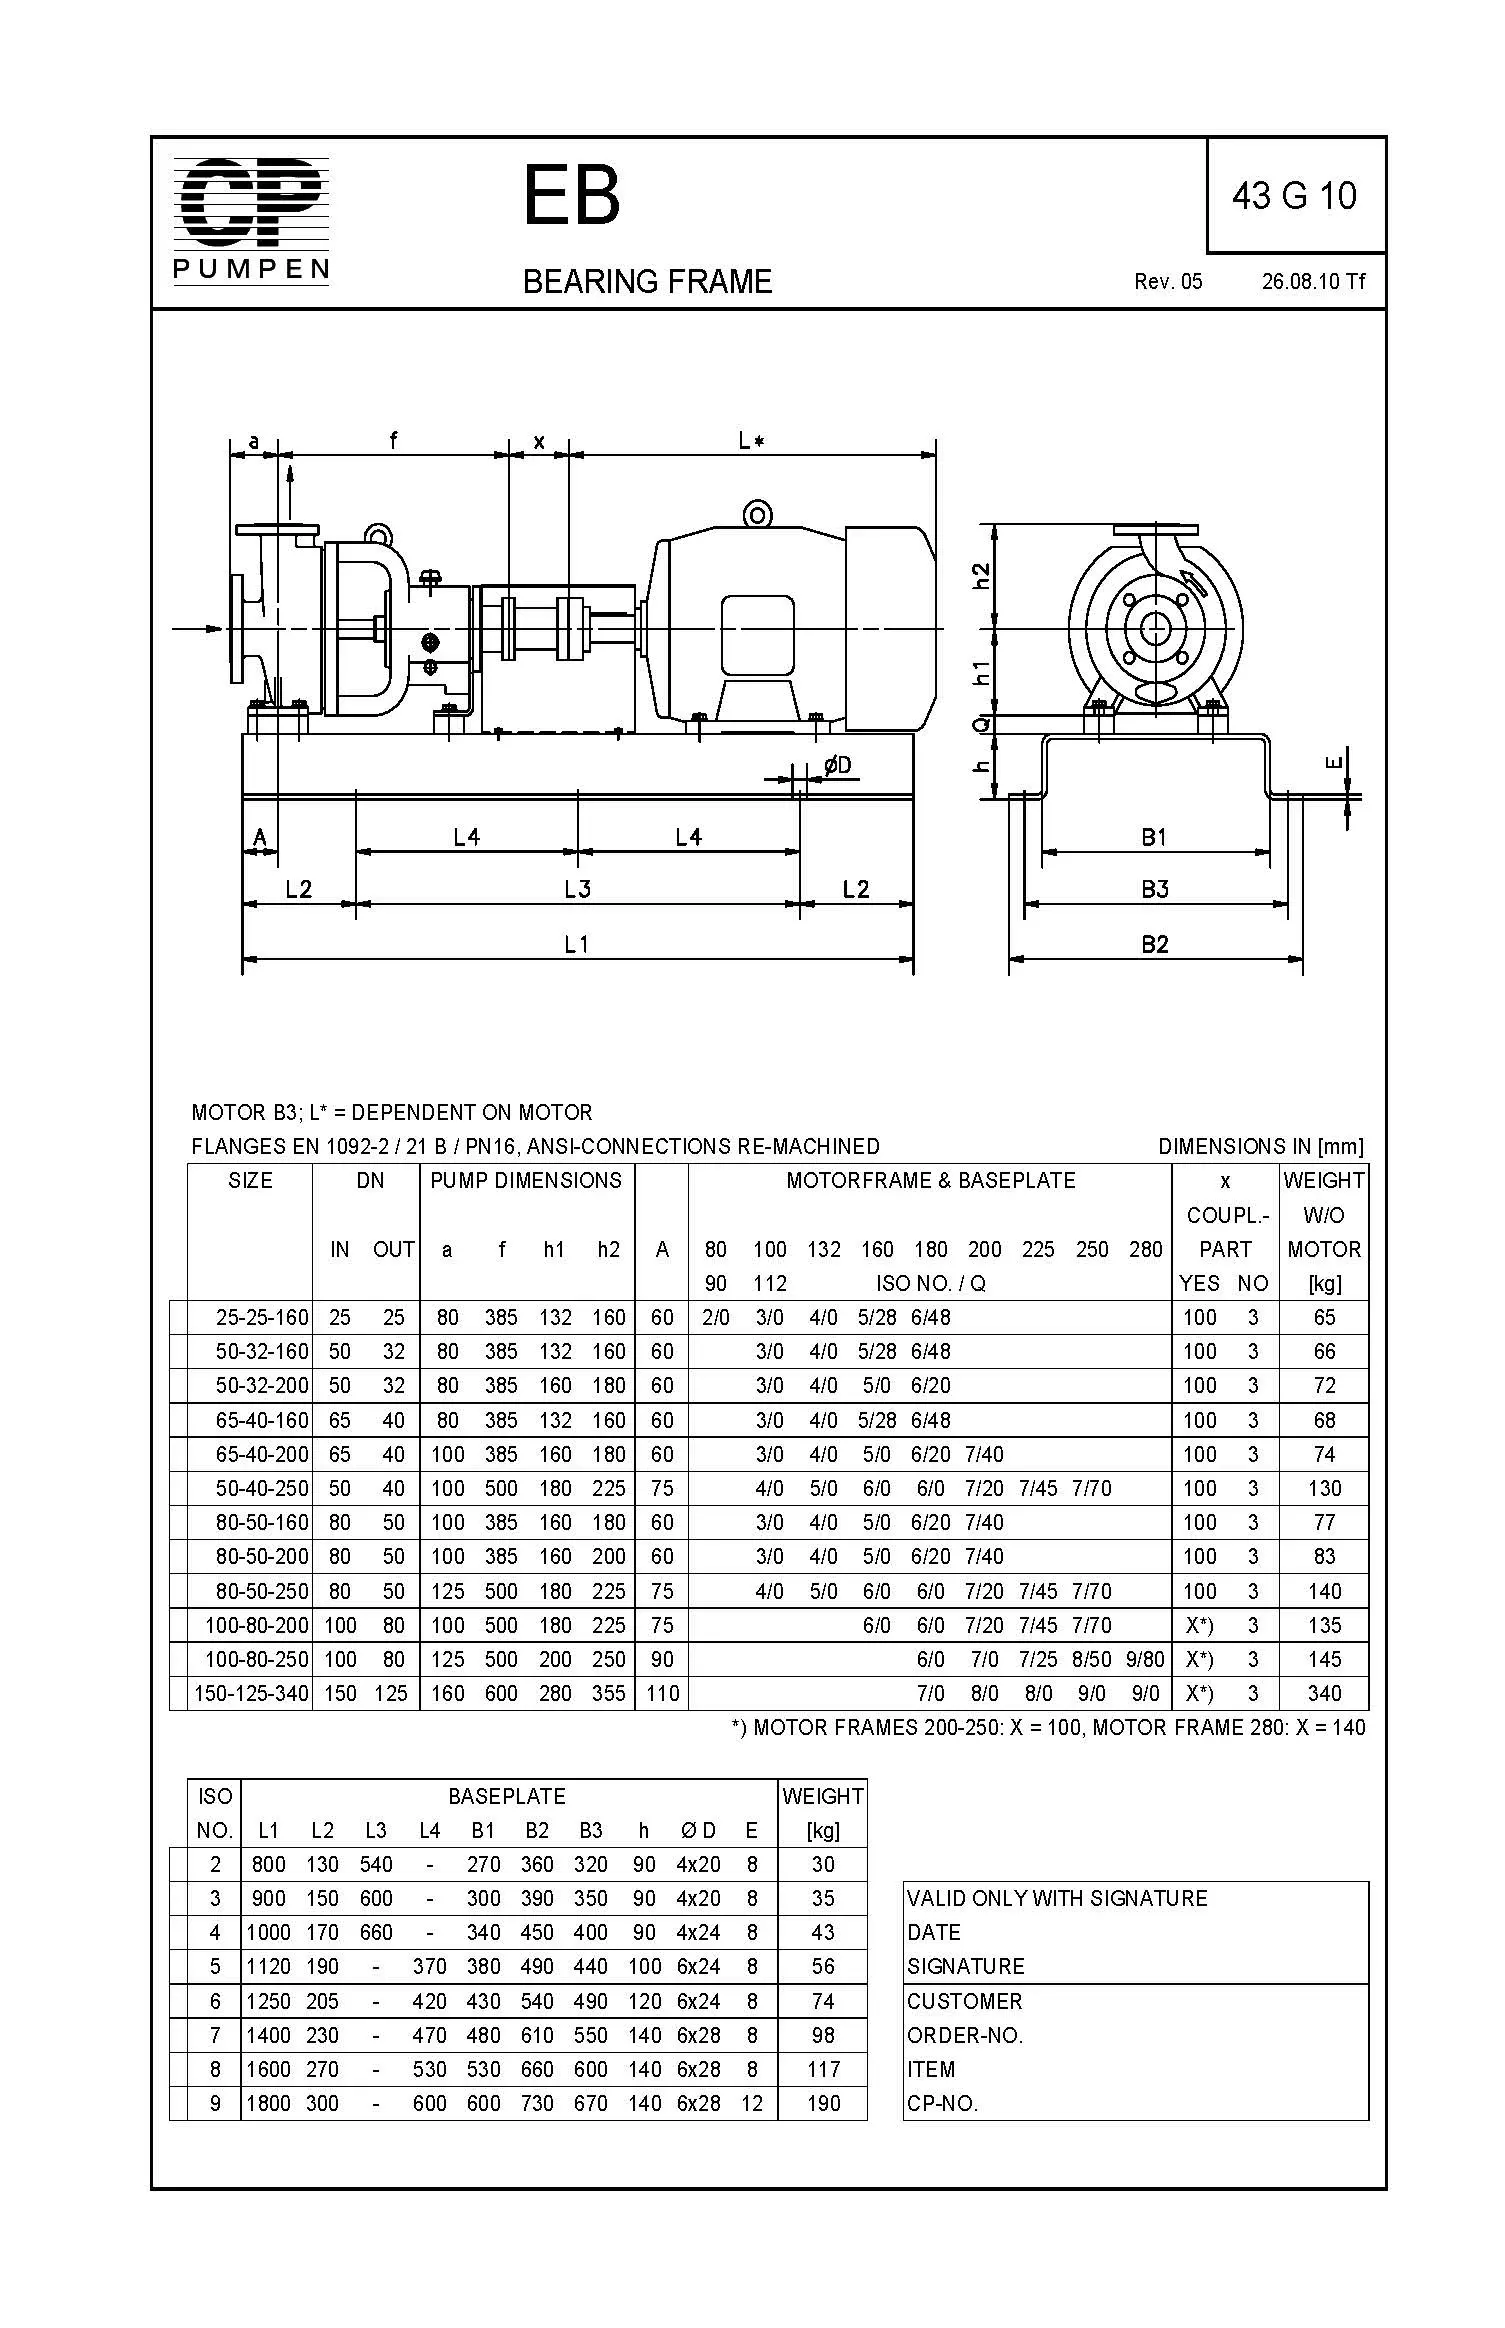 DimensionalDrawing EB Baseplate Motor 43G10 Rev05